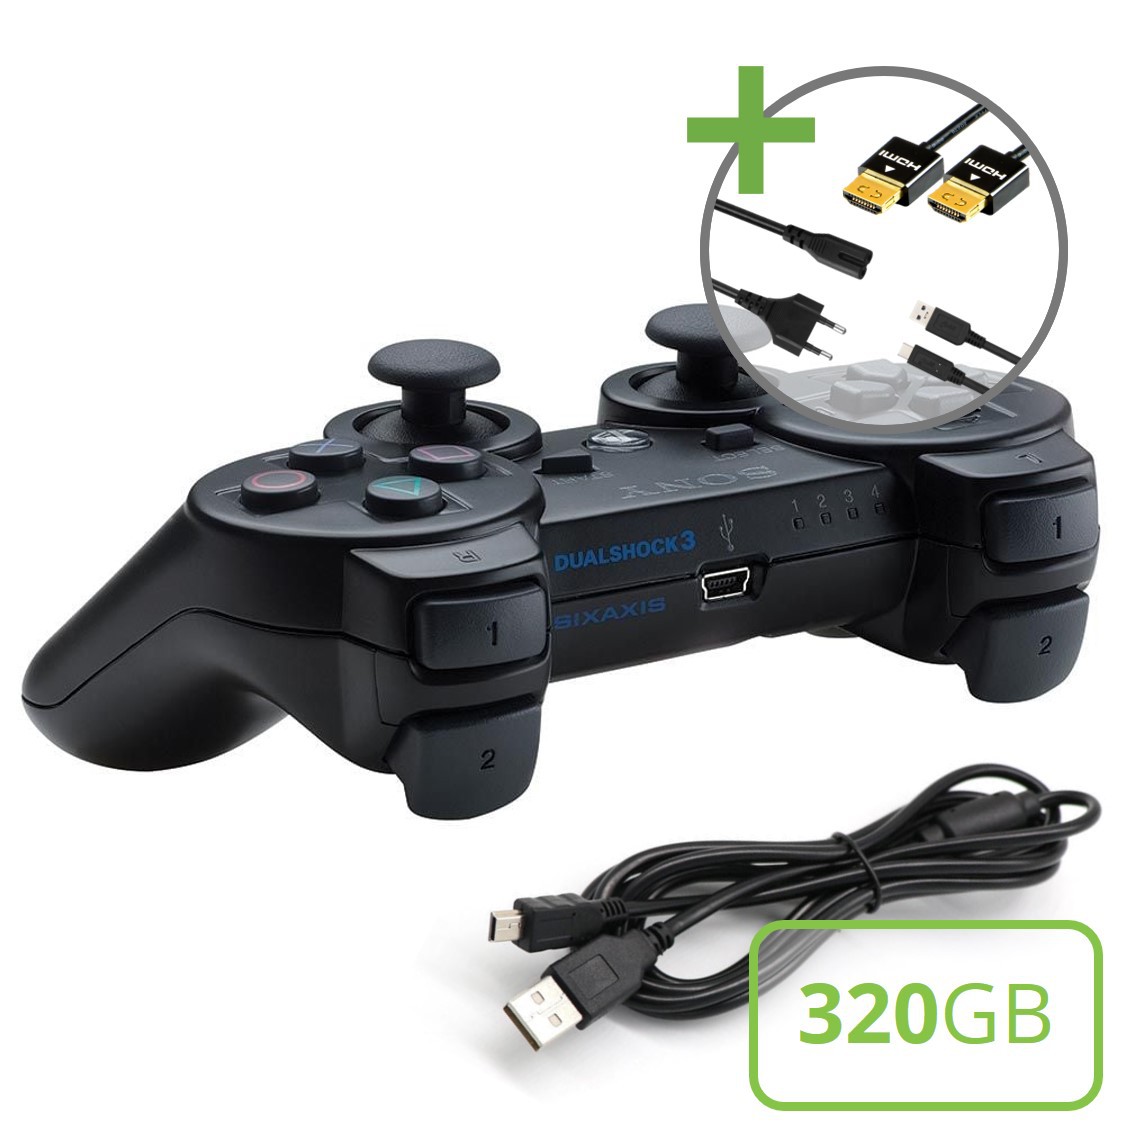 Sony PlayStation 3 Slim (320GB) Starter Pack - DualShock Edition - Playstation 3 Hardware - 4